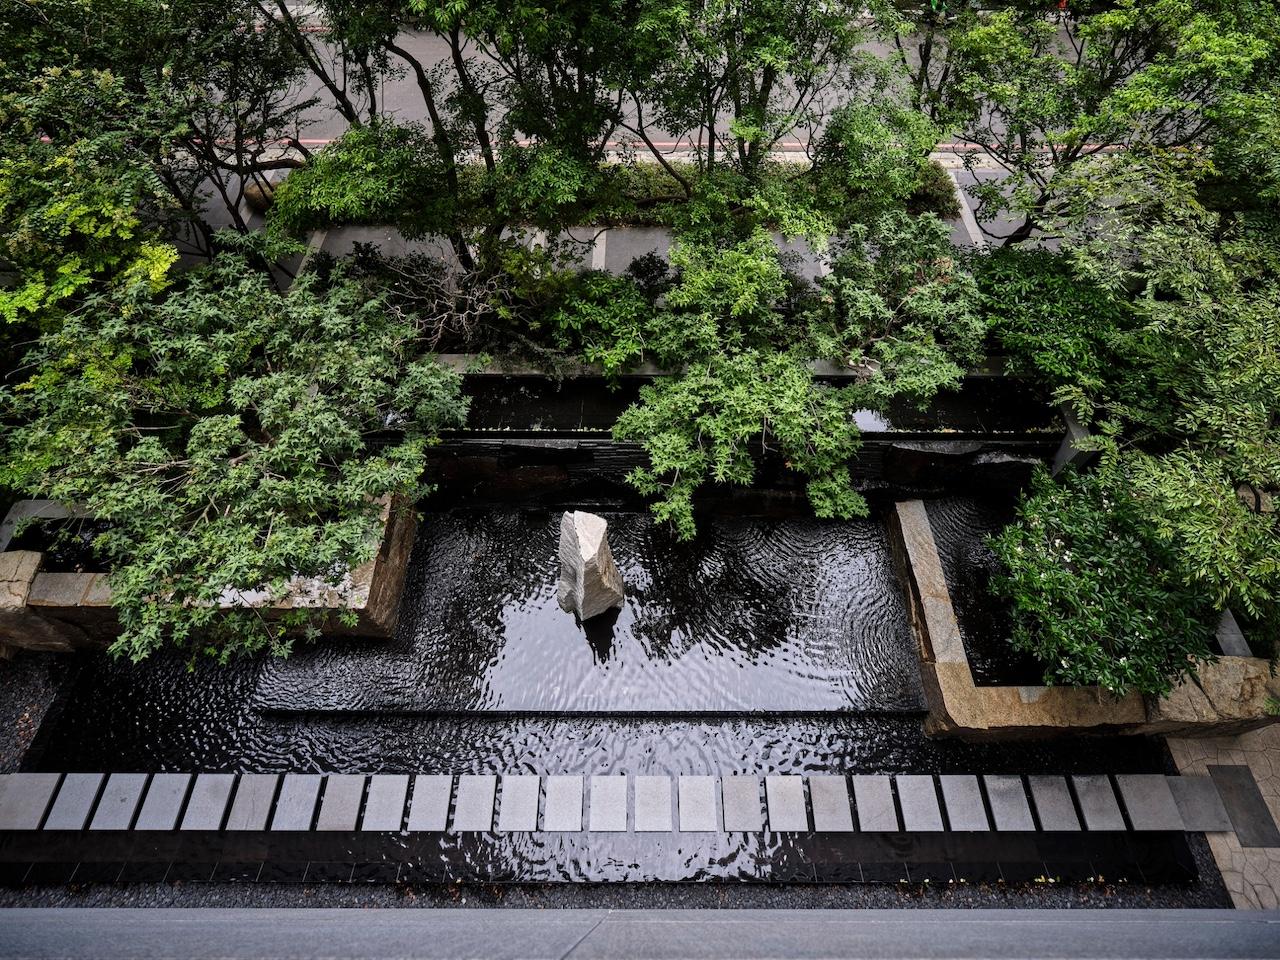 Japanese Garden Designer, Shunmyo Masuno, Creates Exquisite Gardens for High-end Residential Project in Taiwan